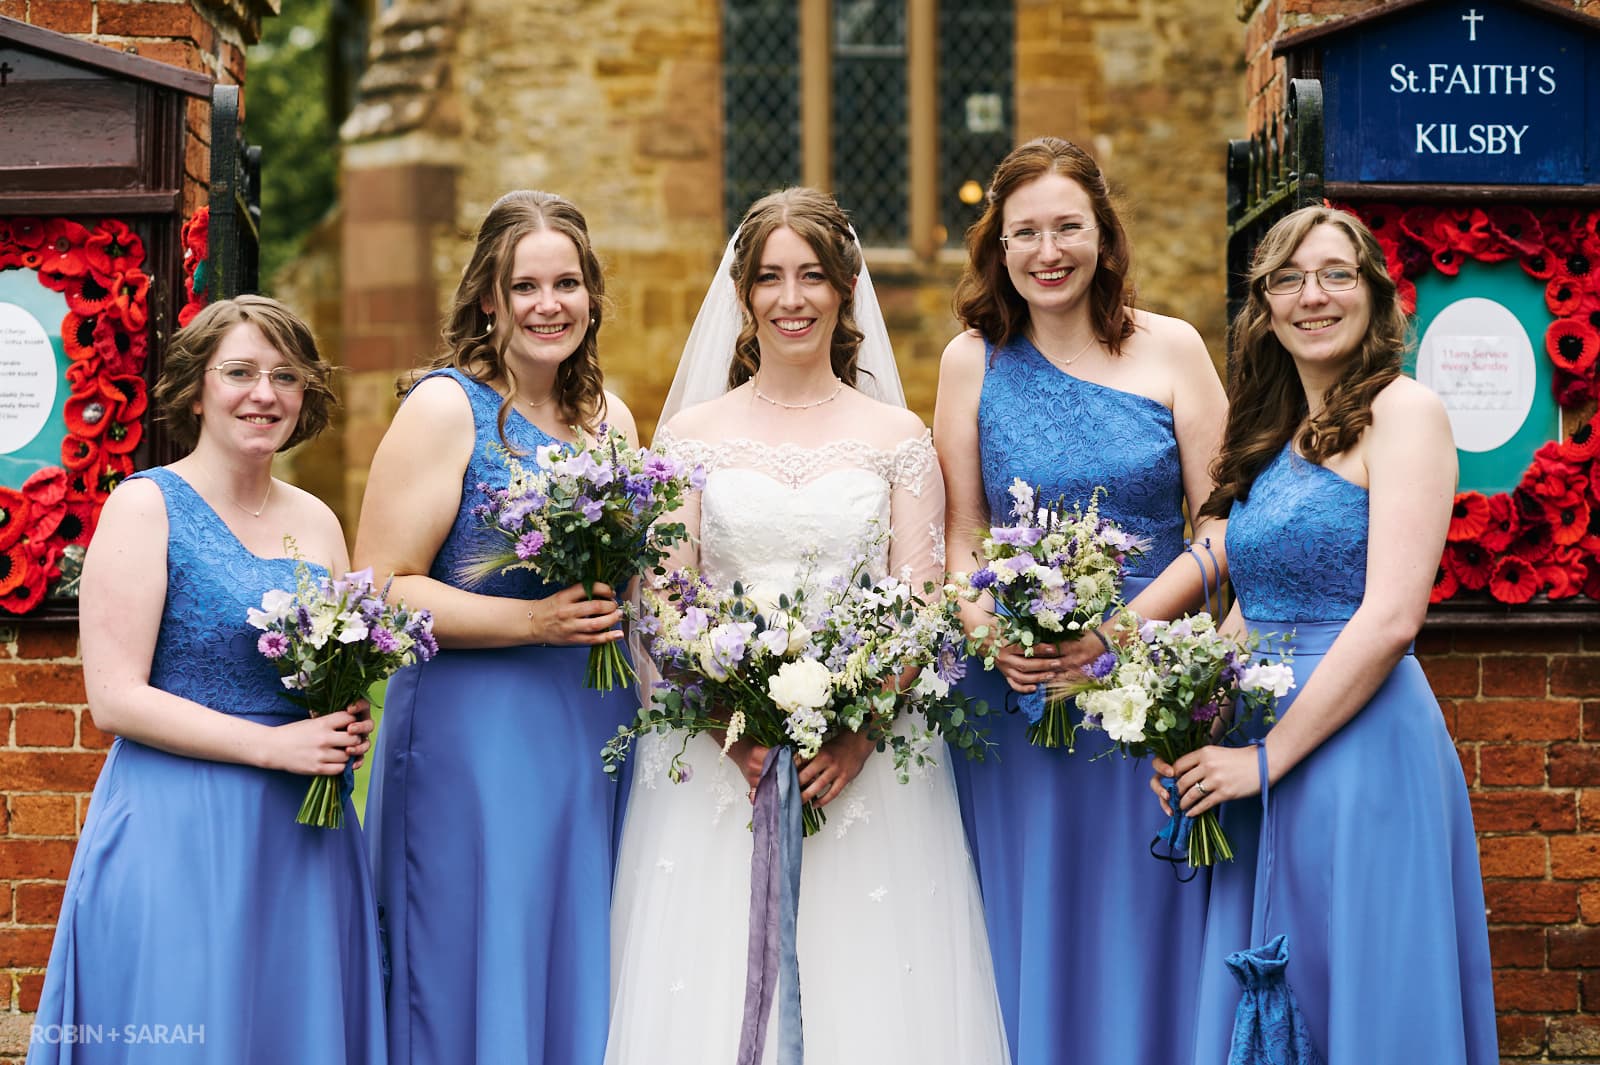 Group photo of bride and bridesmaids at St Faiths church Kilsby